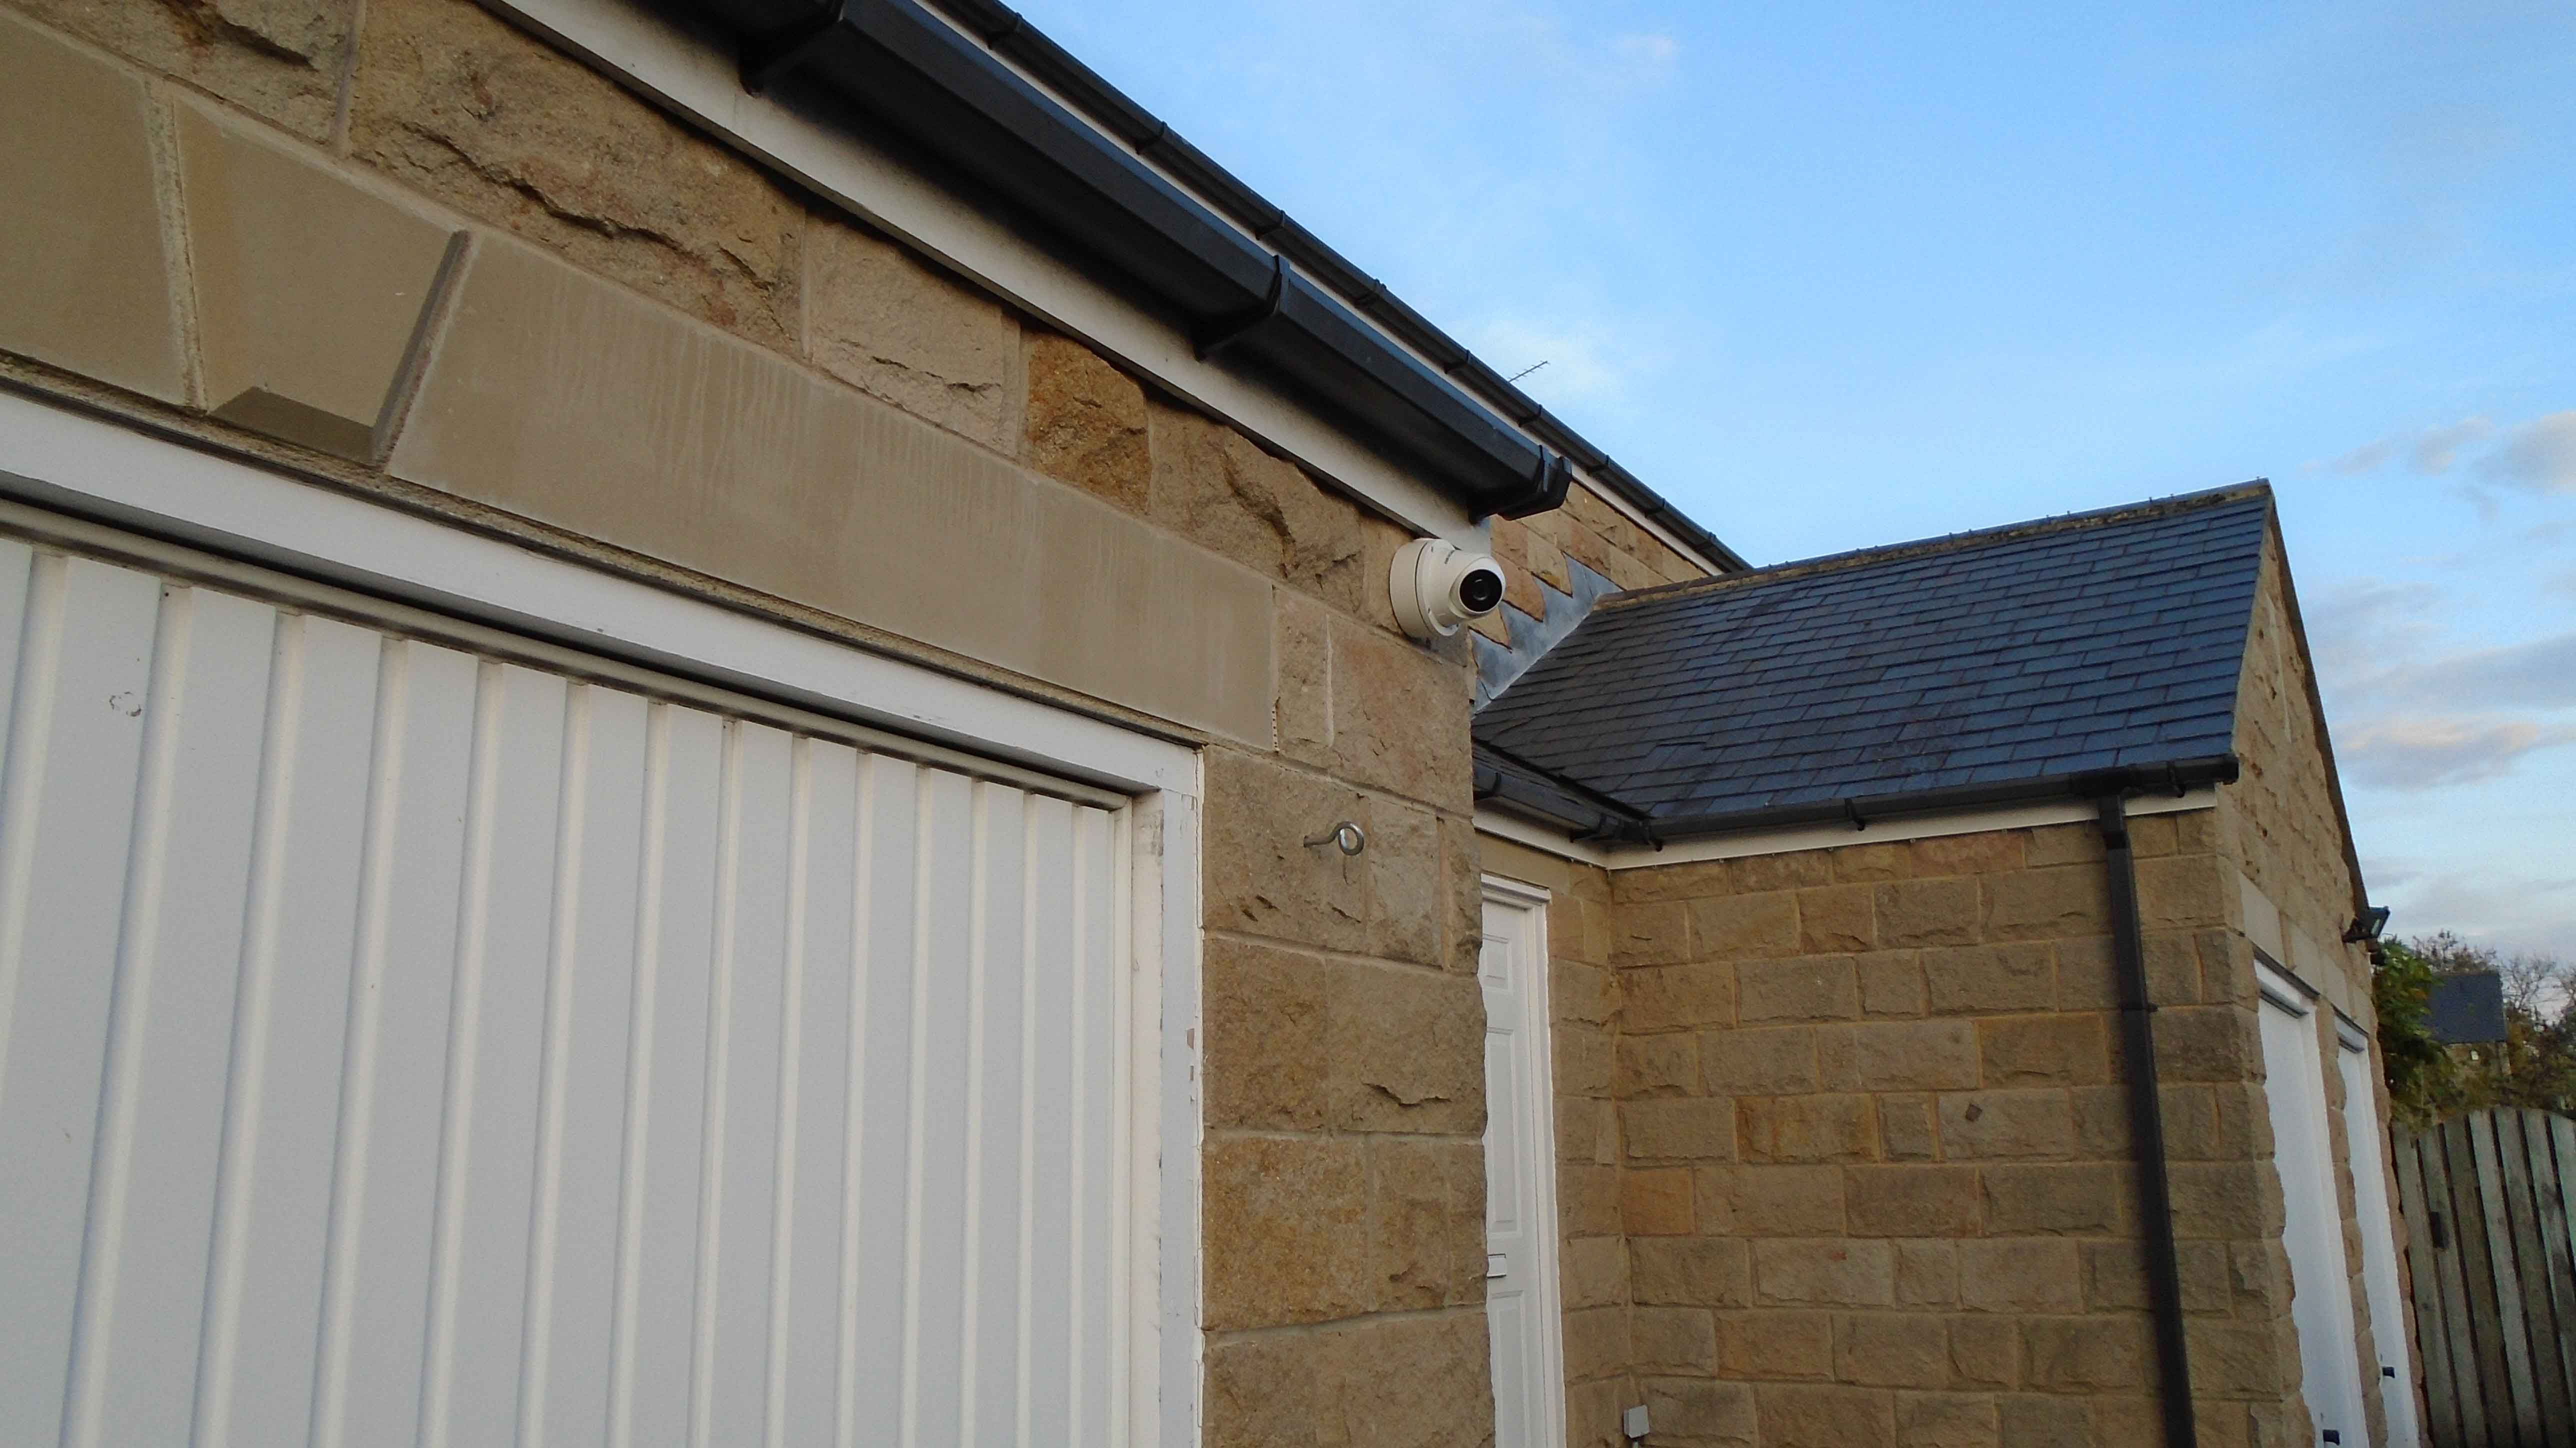 Home CCTV install - Thorner, Leeds - ZoneCCTV